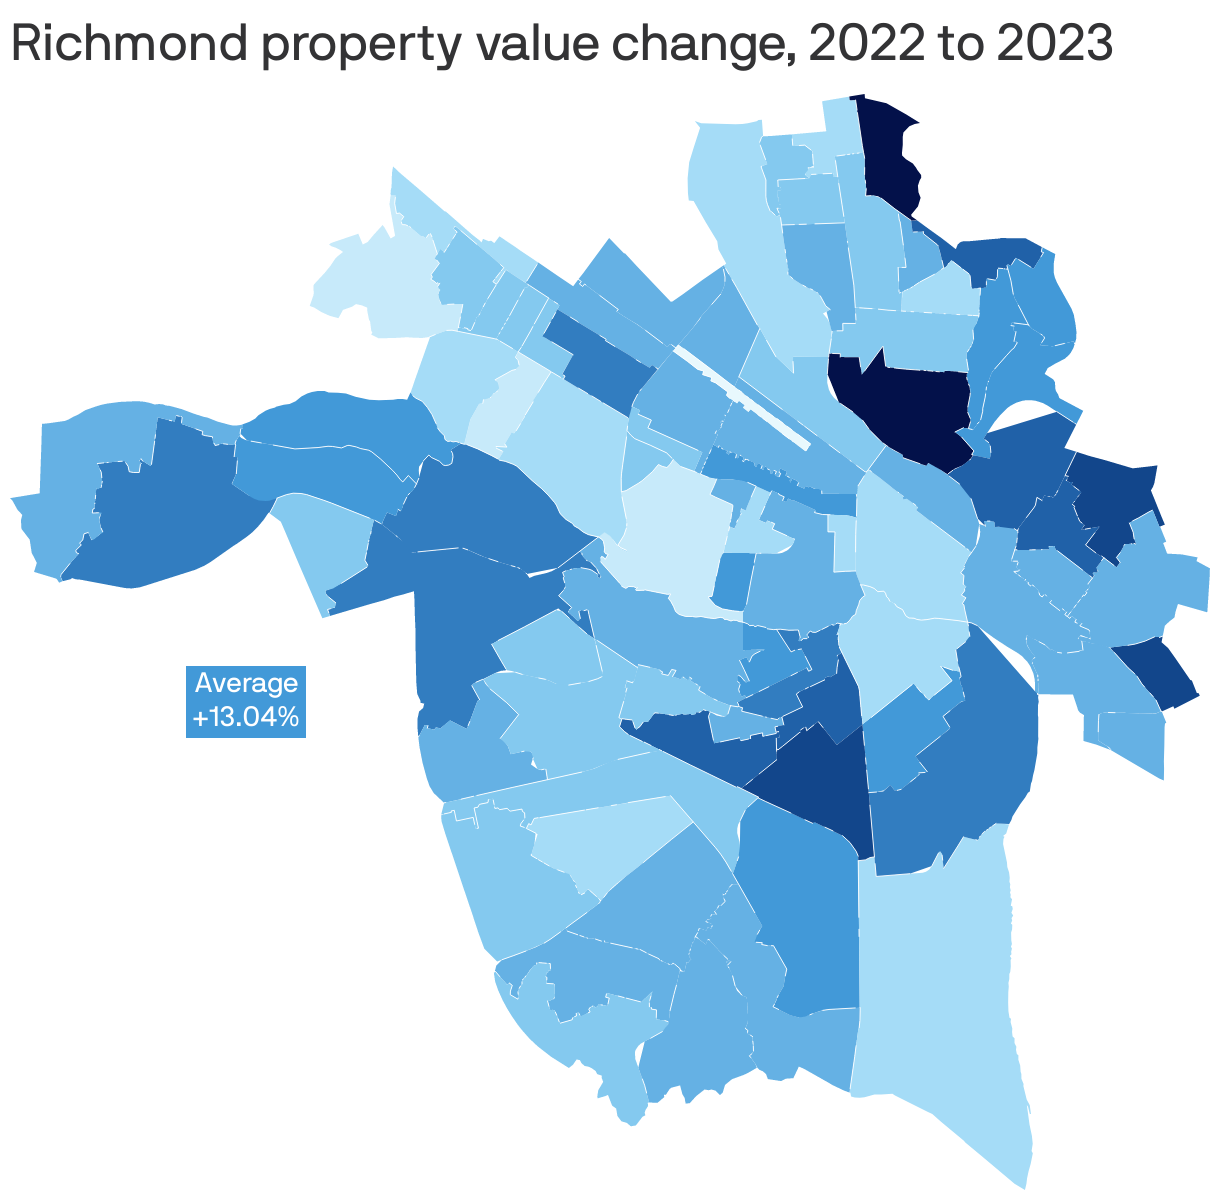 Richmond property value change, 2022 to 2023